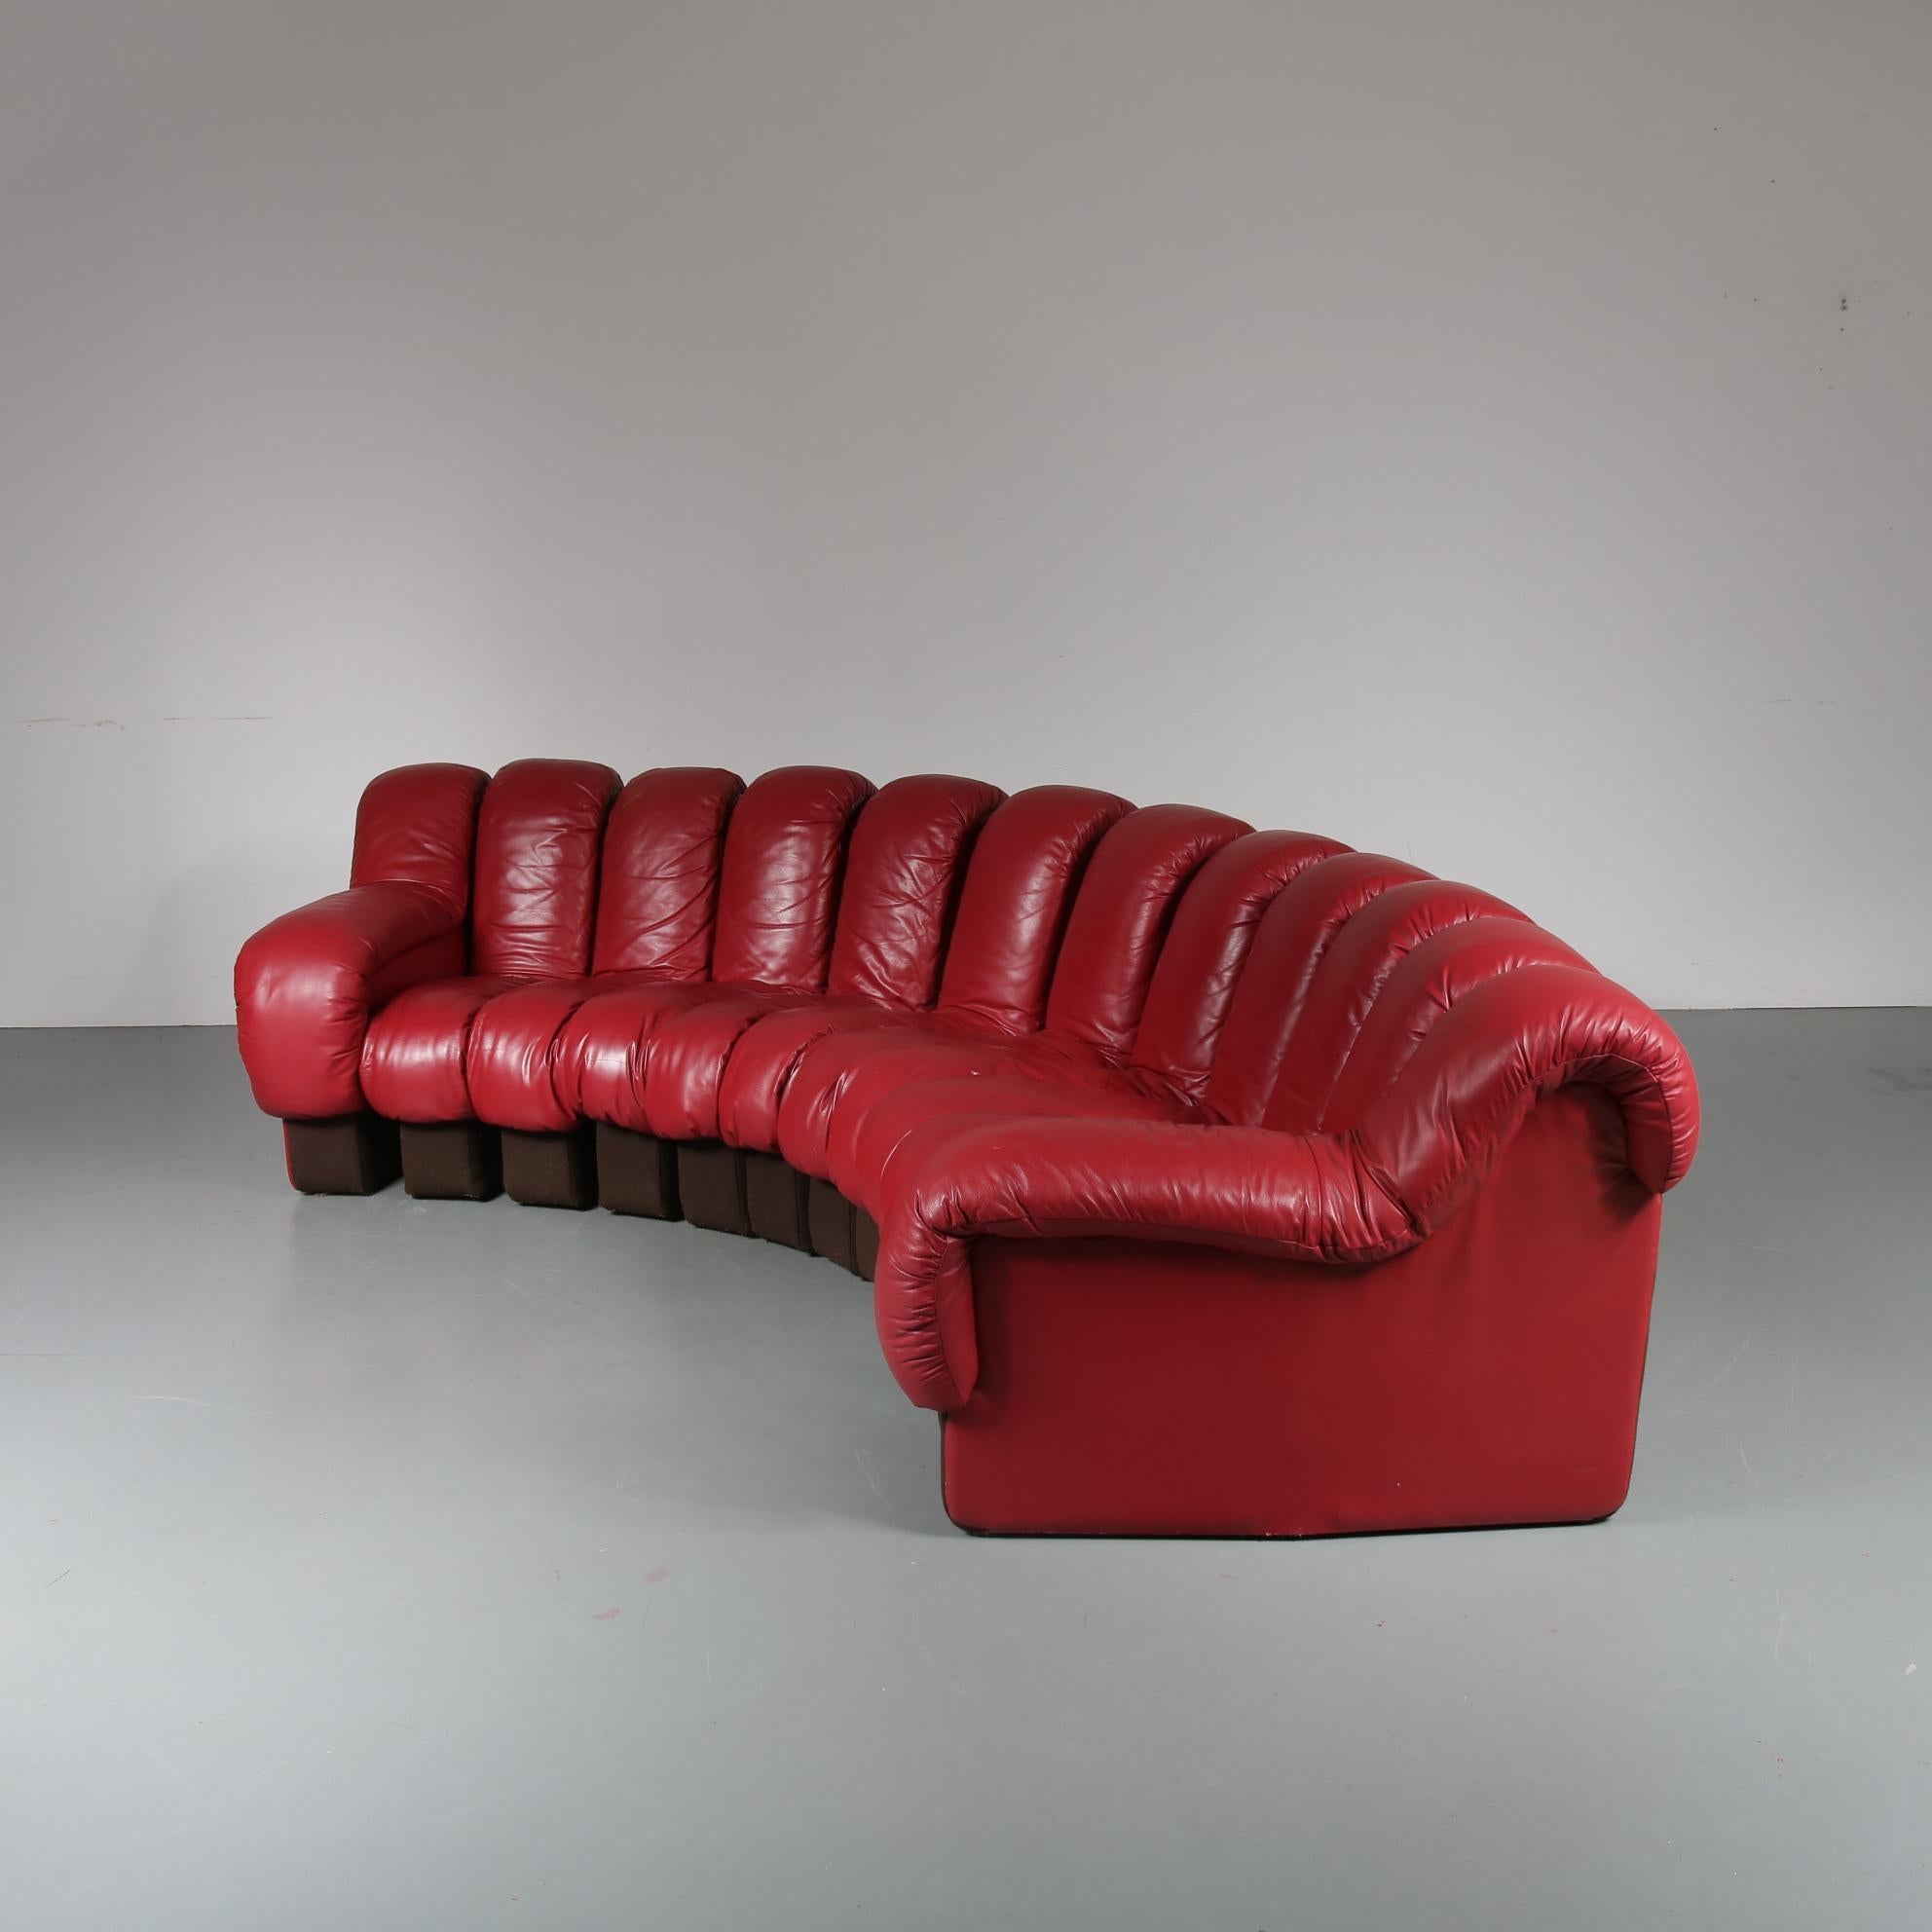 De Sede DS-600 Sofa aus rotem Leder, Schweiz, 1960 (Schweizerisch)